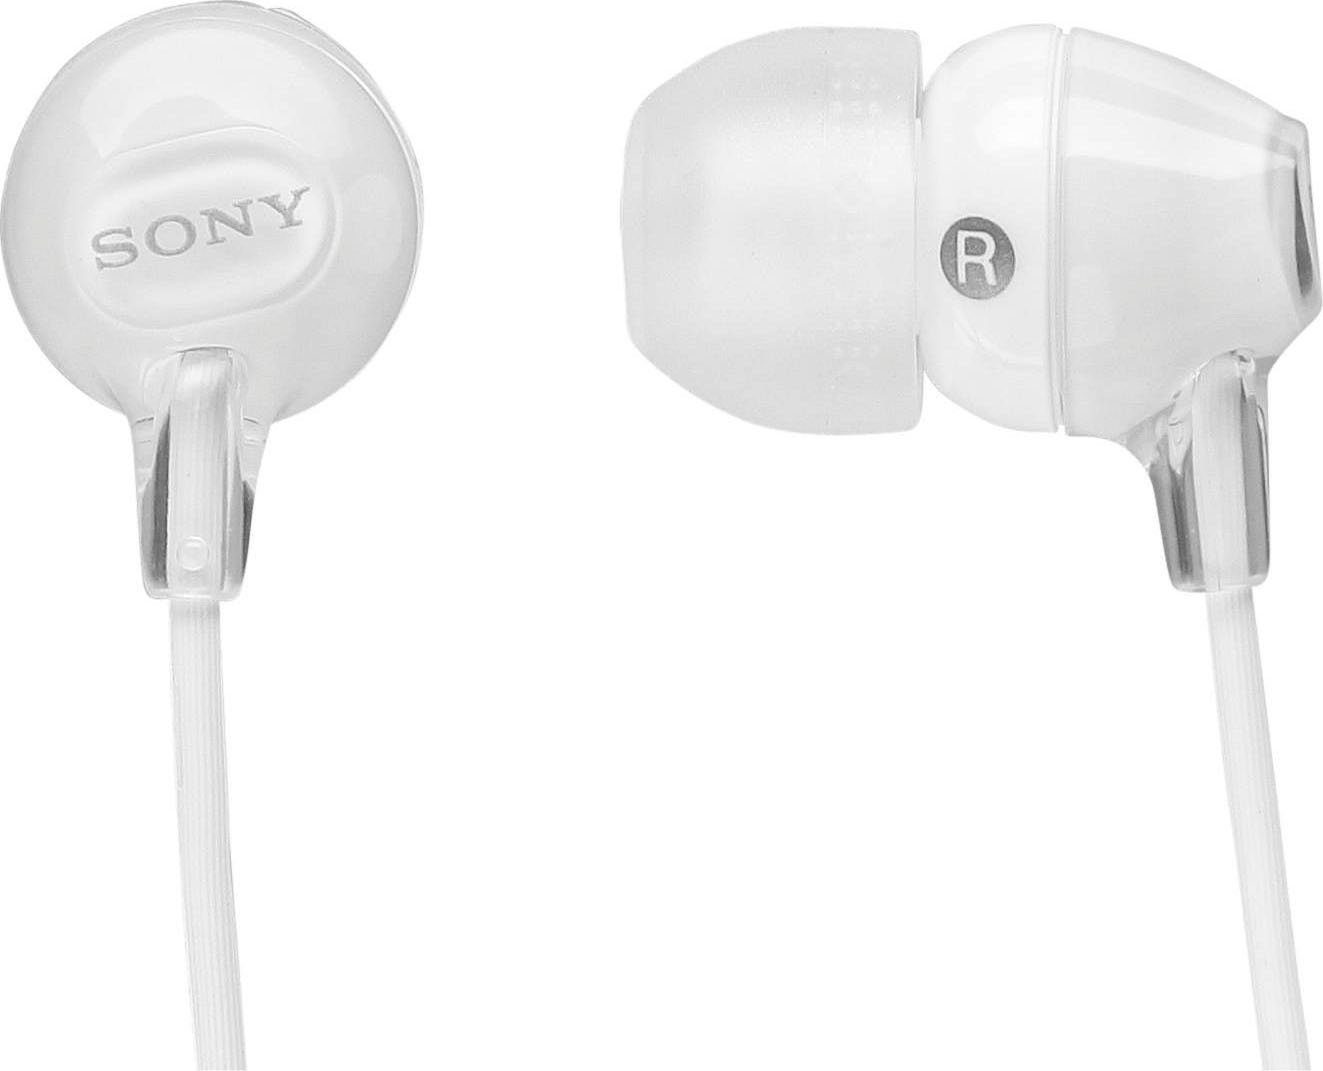 MDR-EX15AP In-Ear-Kopfhörer weiß Fernbedienung) Sony mit (Rauschunterdrückung,